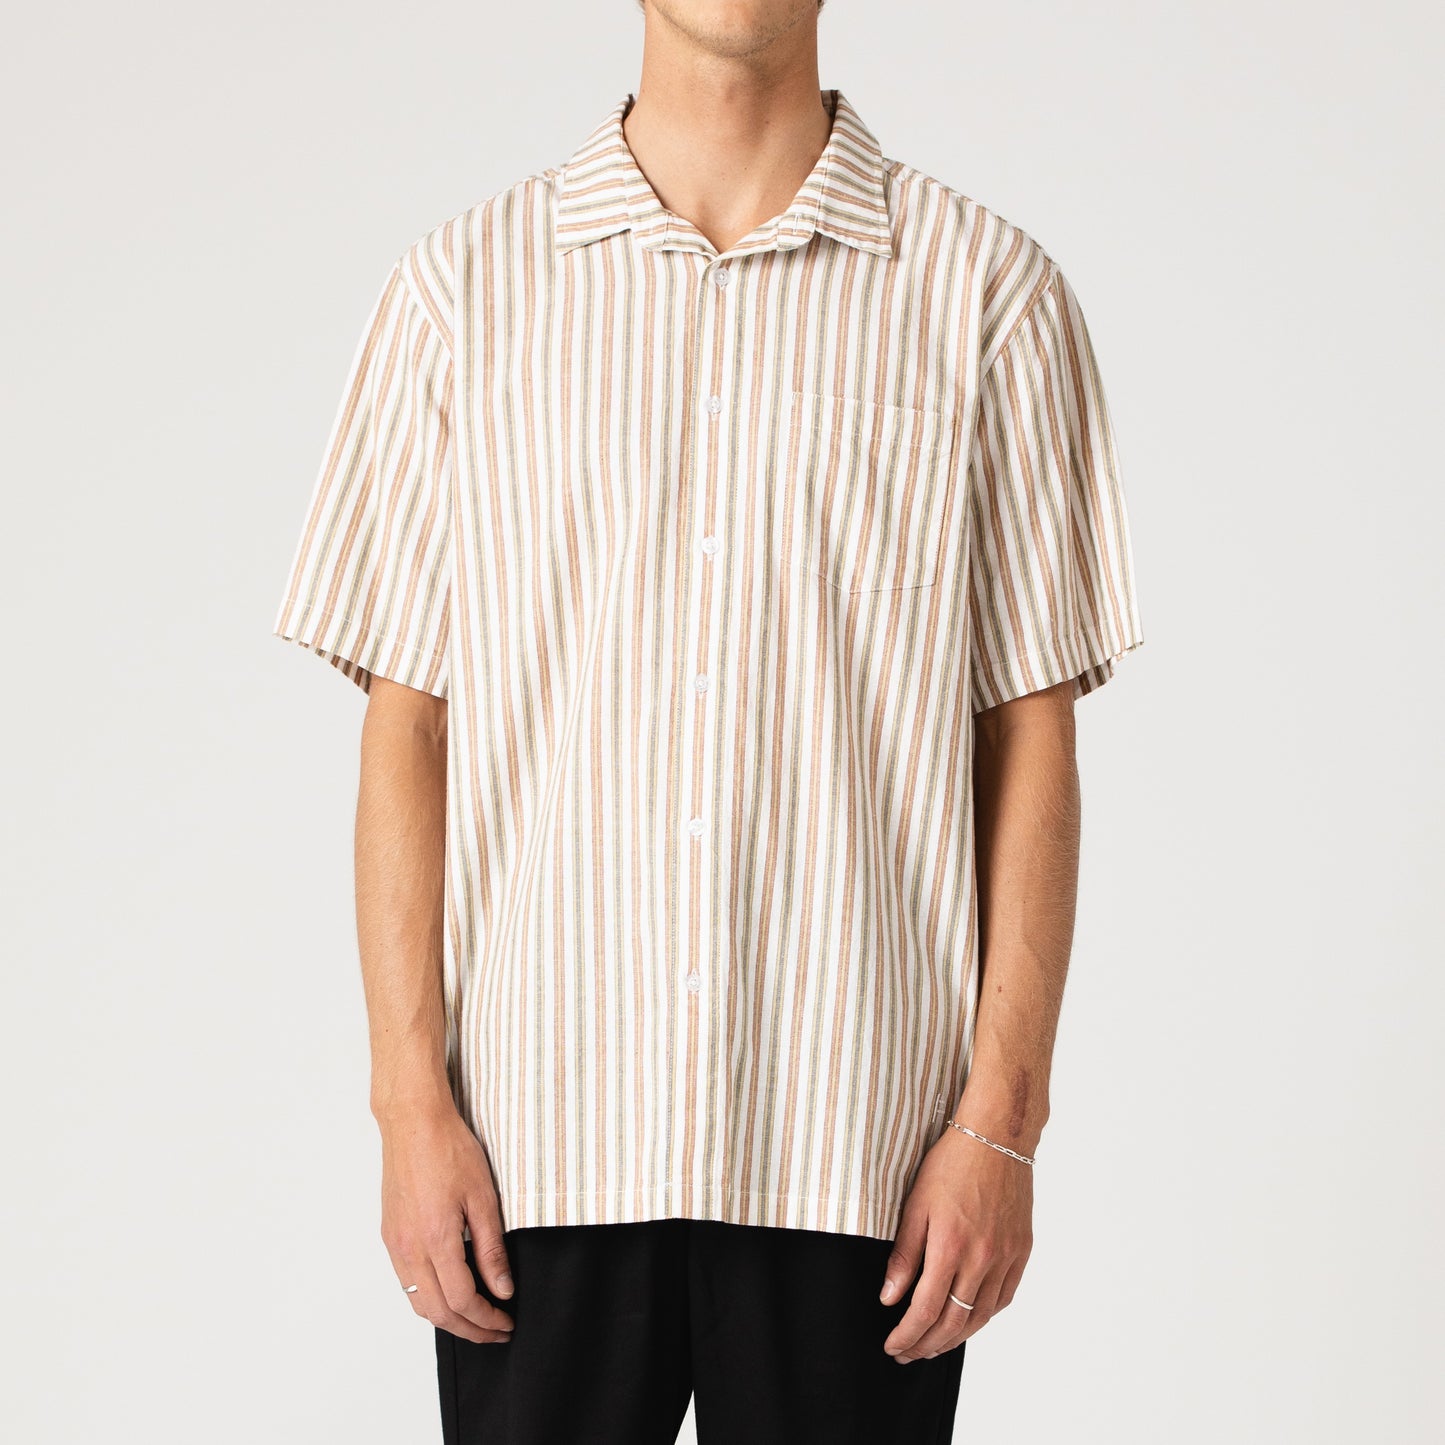 Reynolds Striped SS Shirt - Ochre